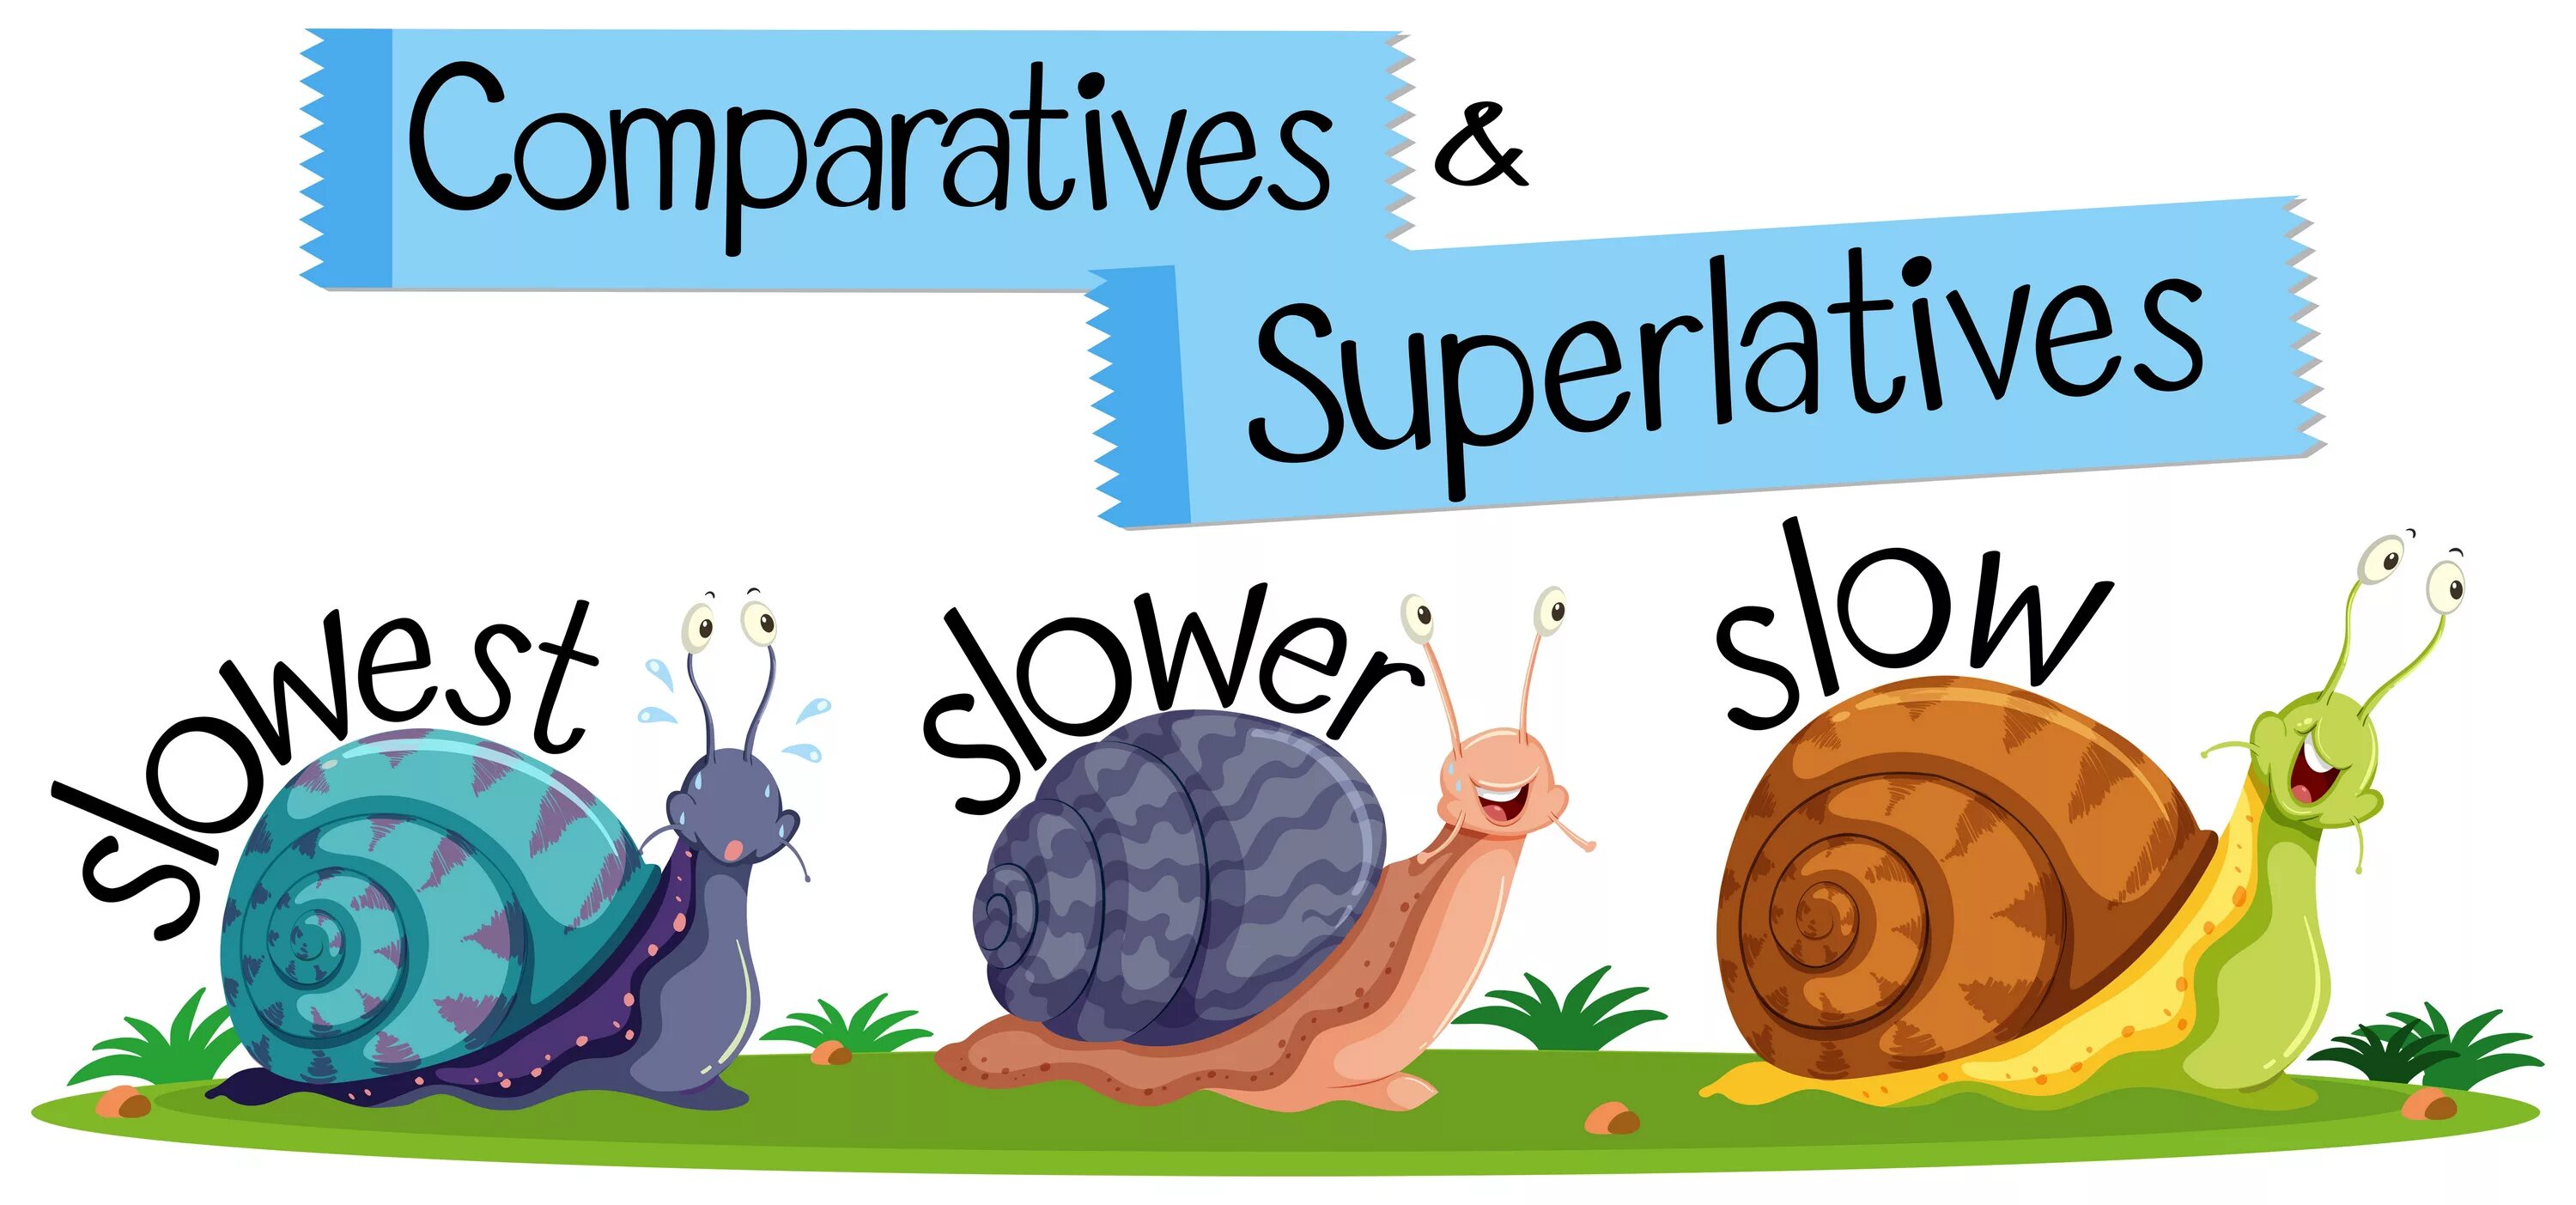 Comparative. Comparative and Superlative adjectives картинки. Comparatives and Superlatives pictures. Comparative and Superlative adjectives pictures. Английское слово cute